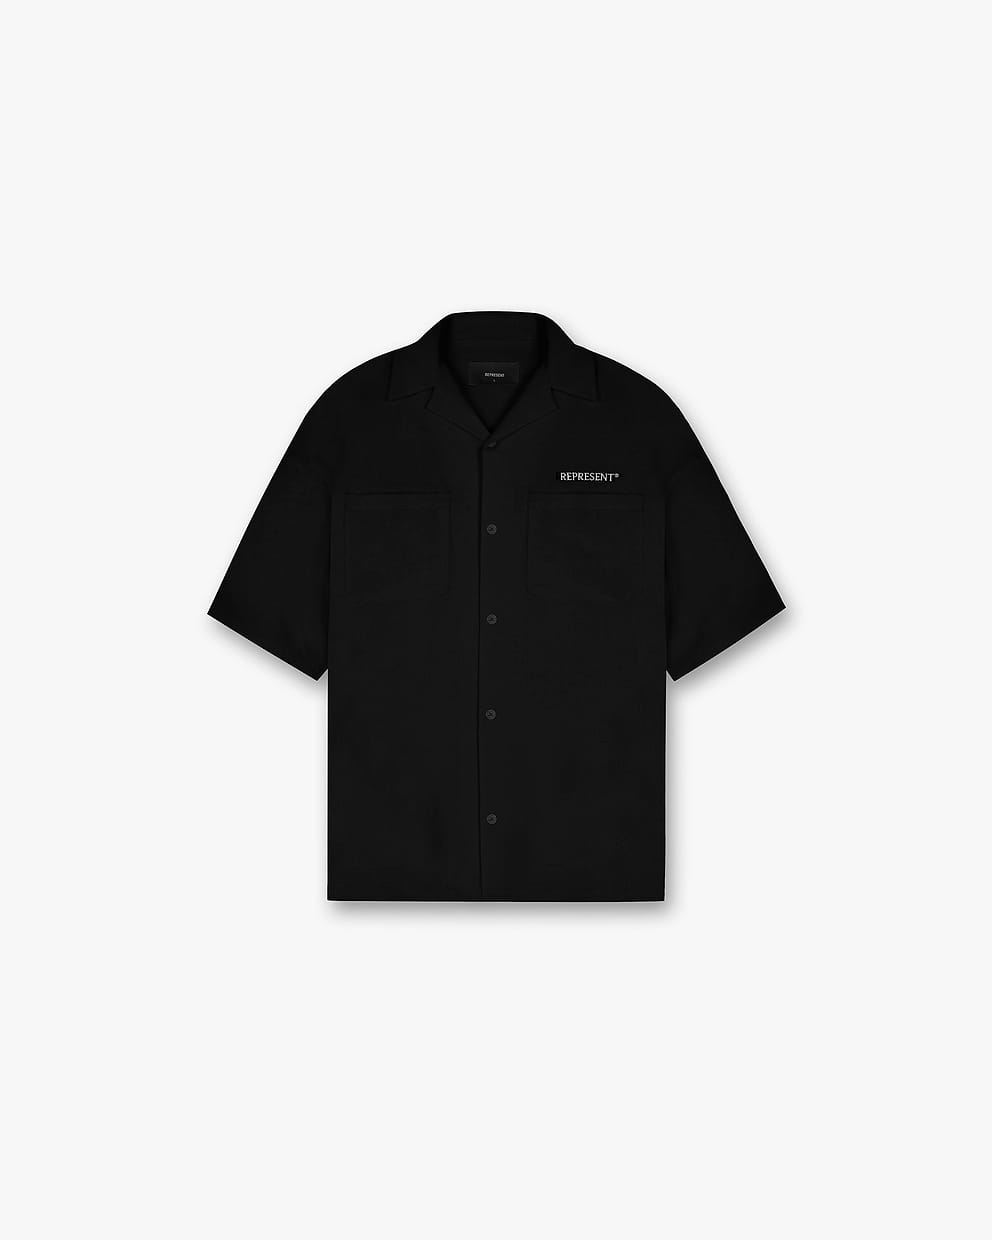 Bowling Shirt - Black